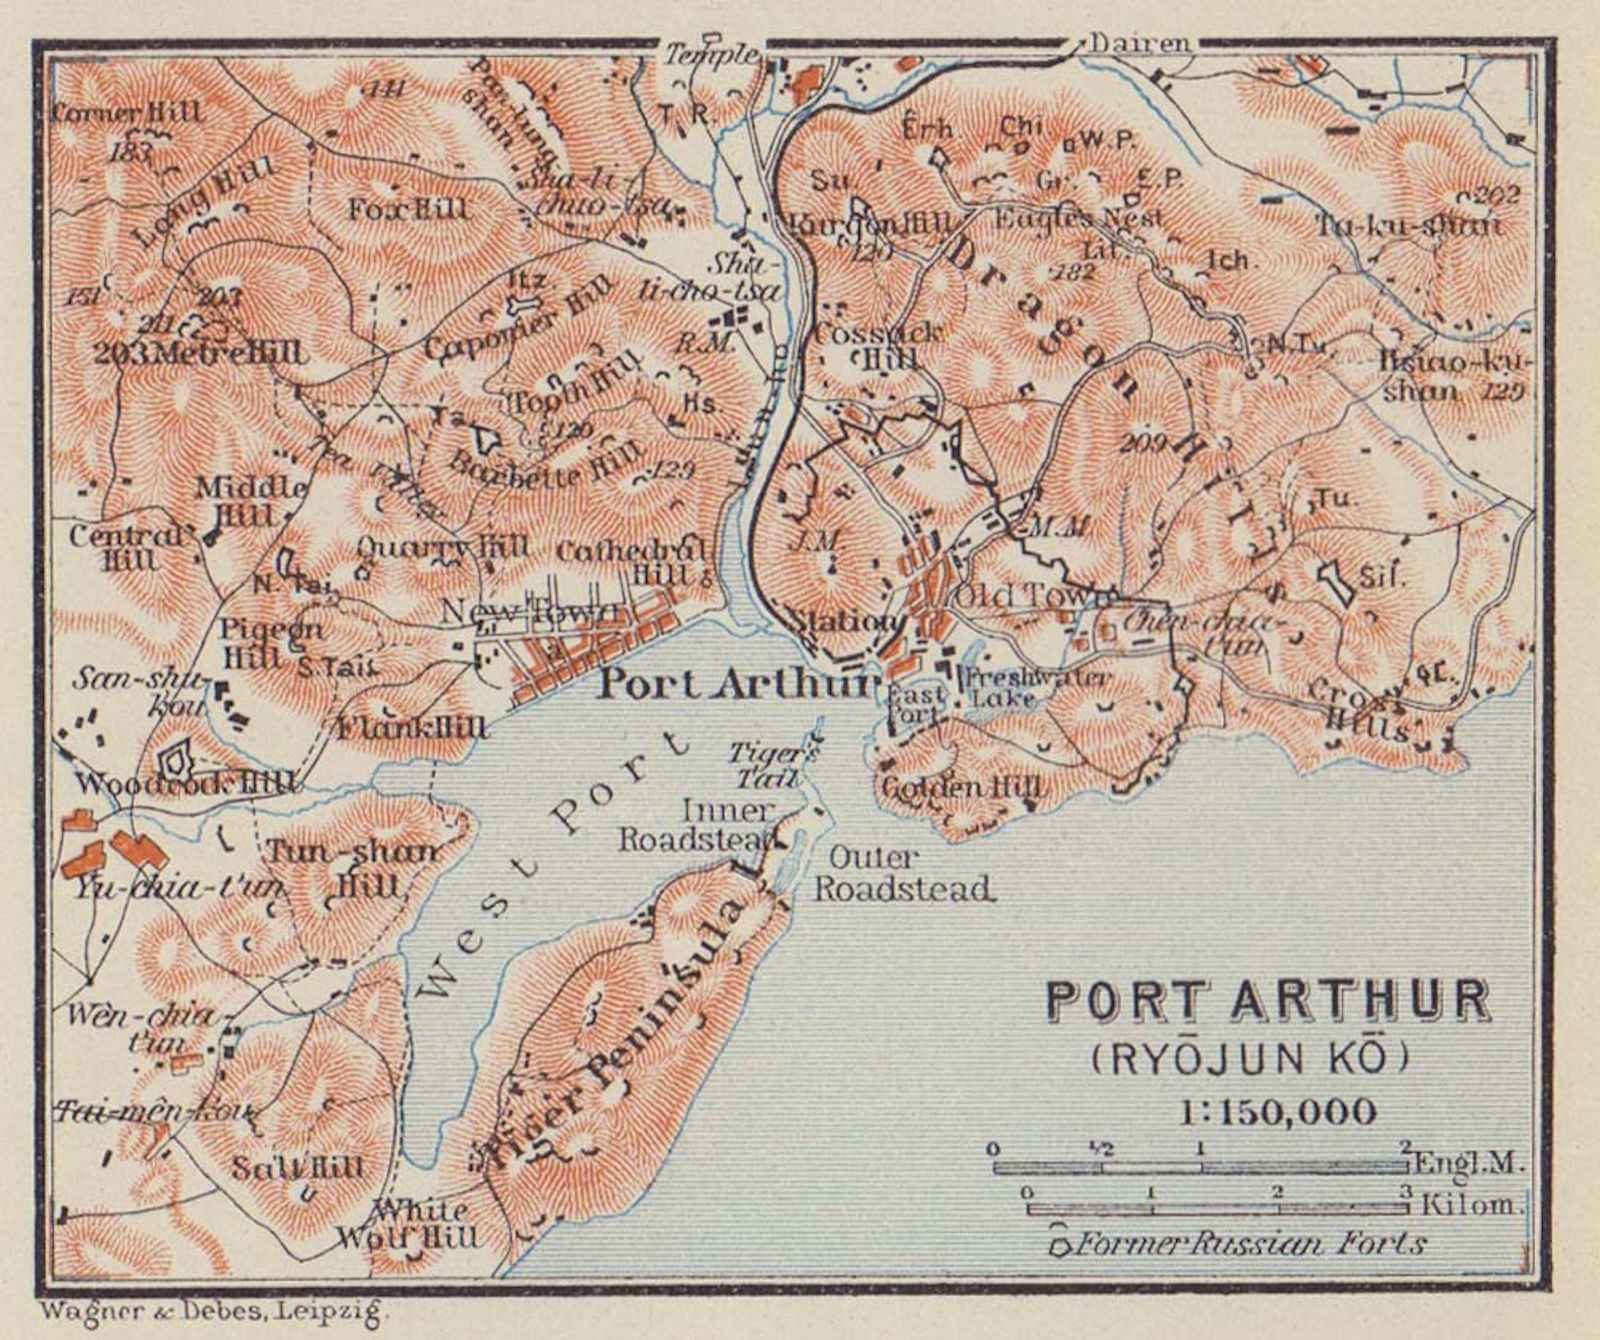 Associate Product Port Arthur city plan Lüshunkou/Lvshunkou District Ryojun China. SMALL 1914 map